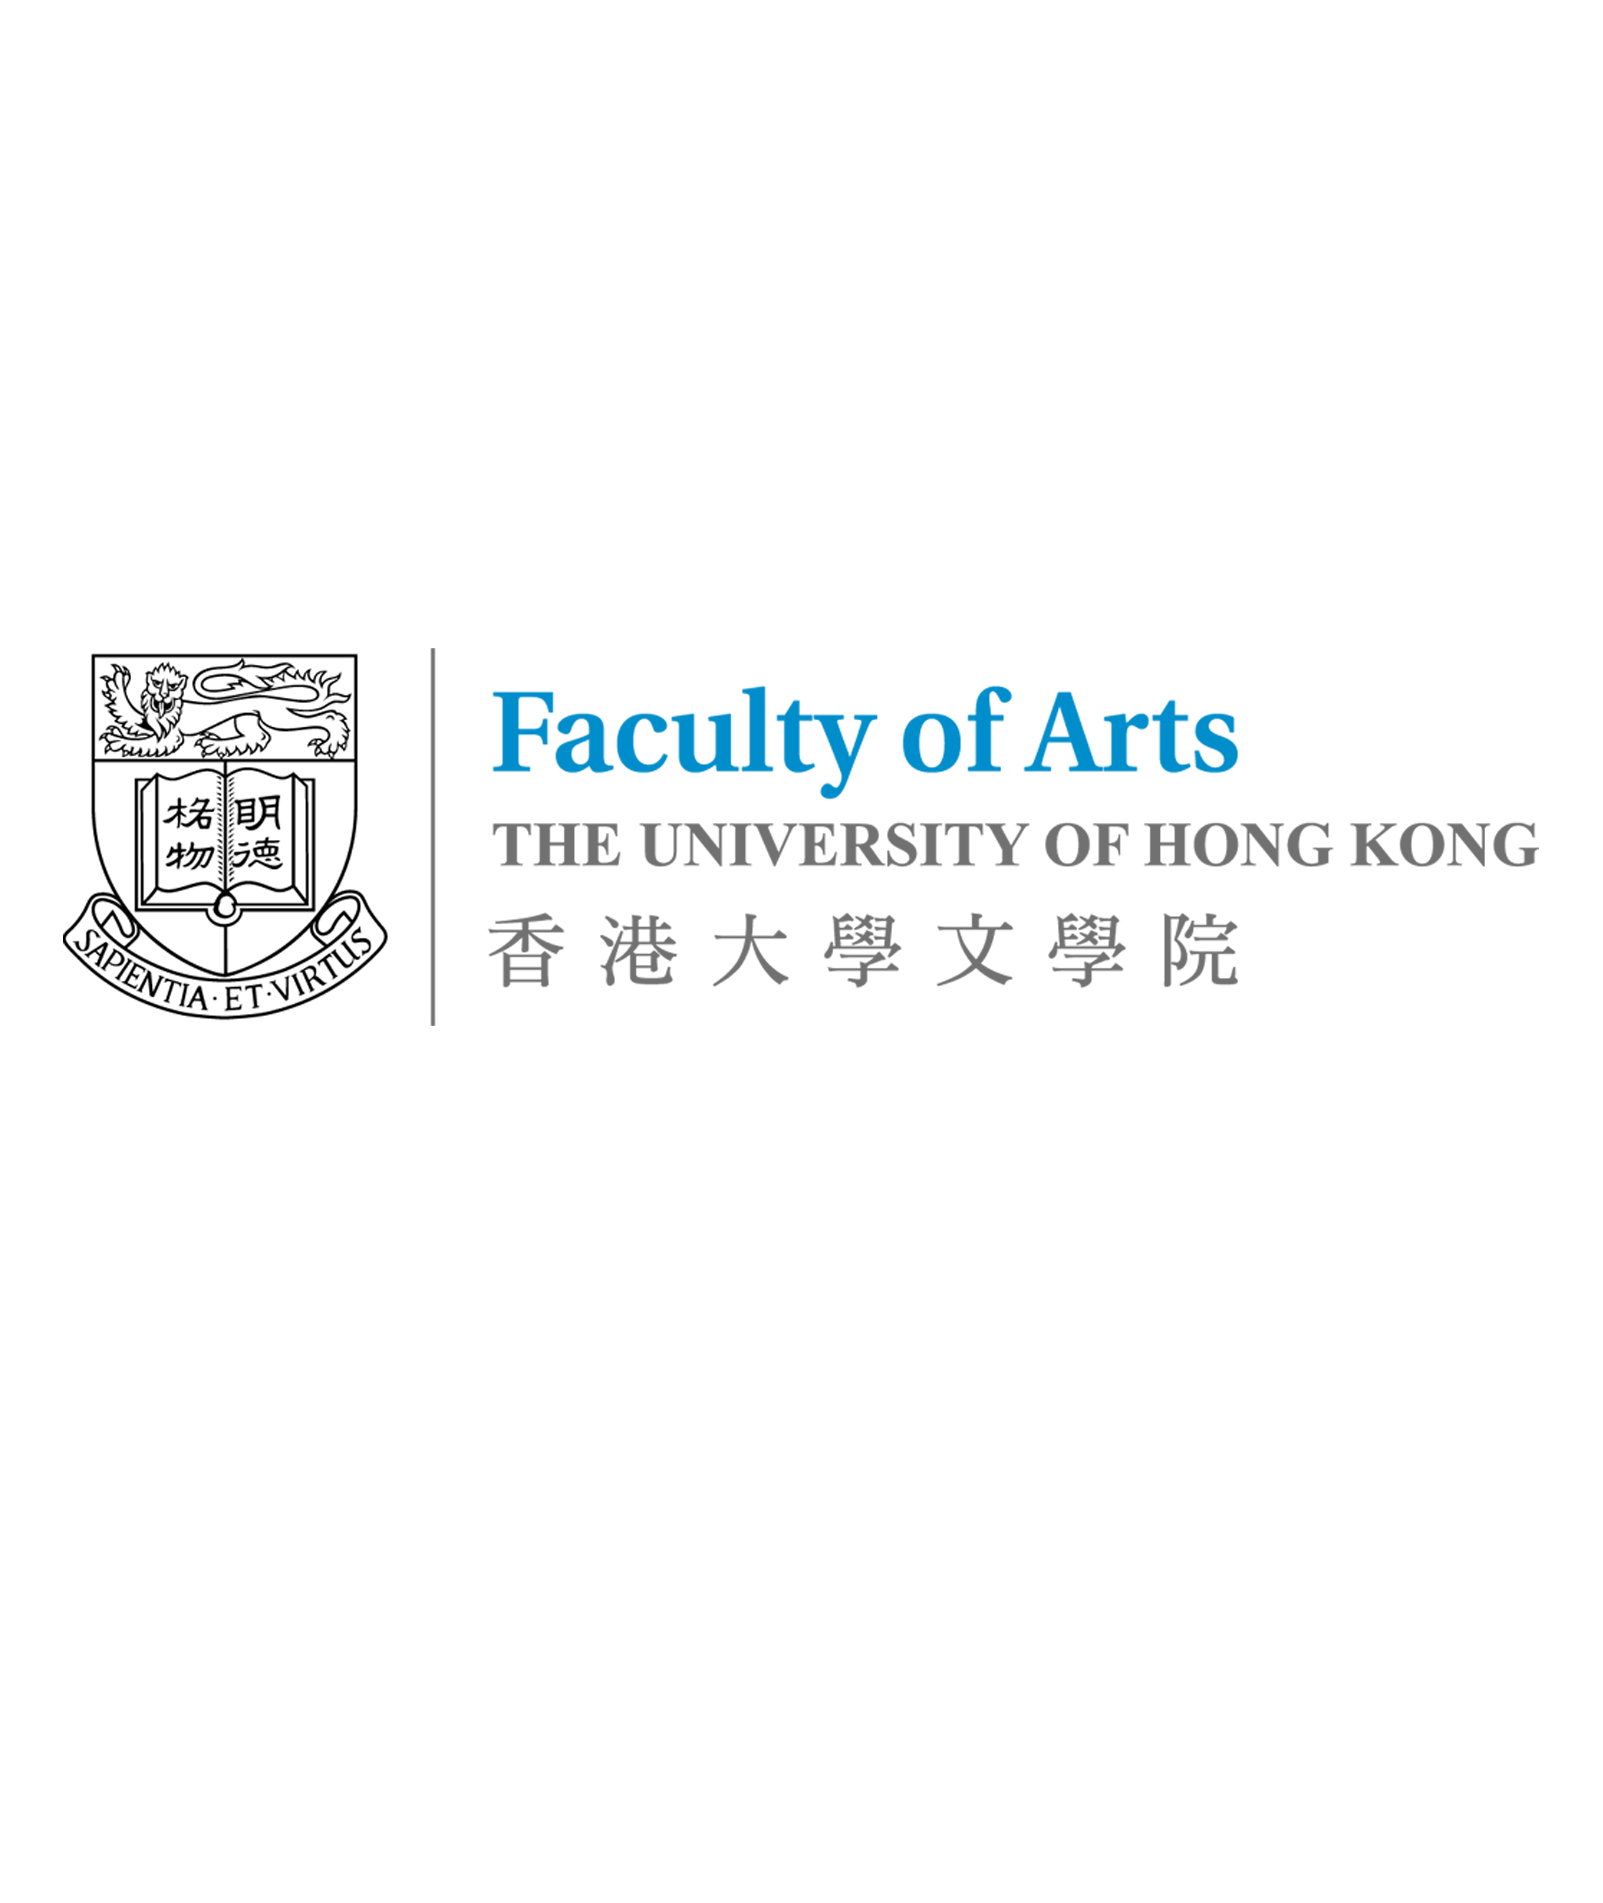 Faculty of Arts, The University of Hong Kong